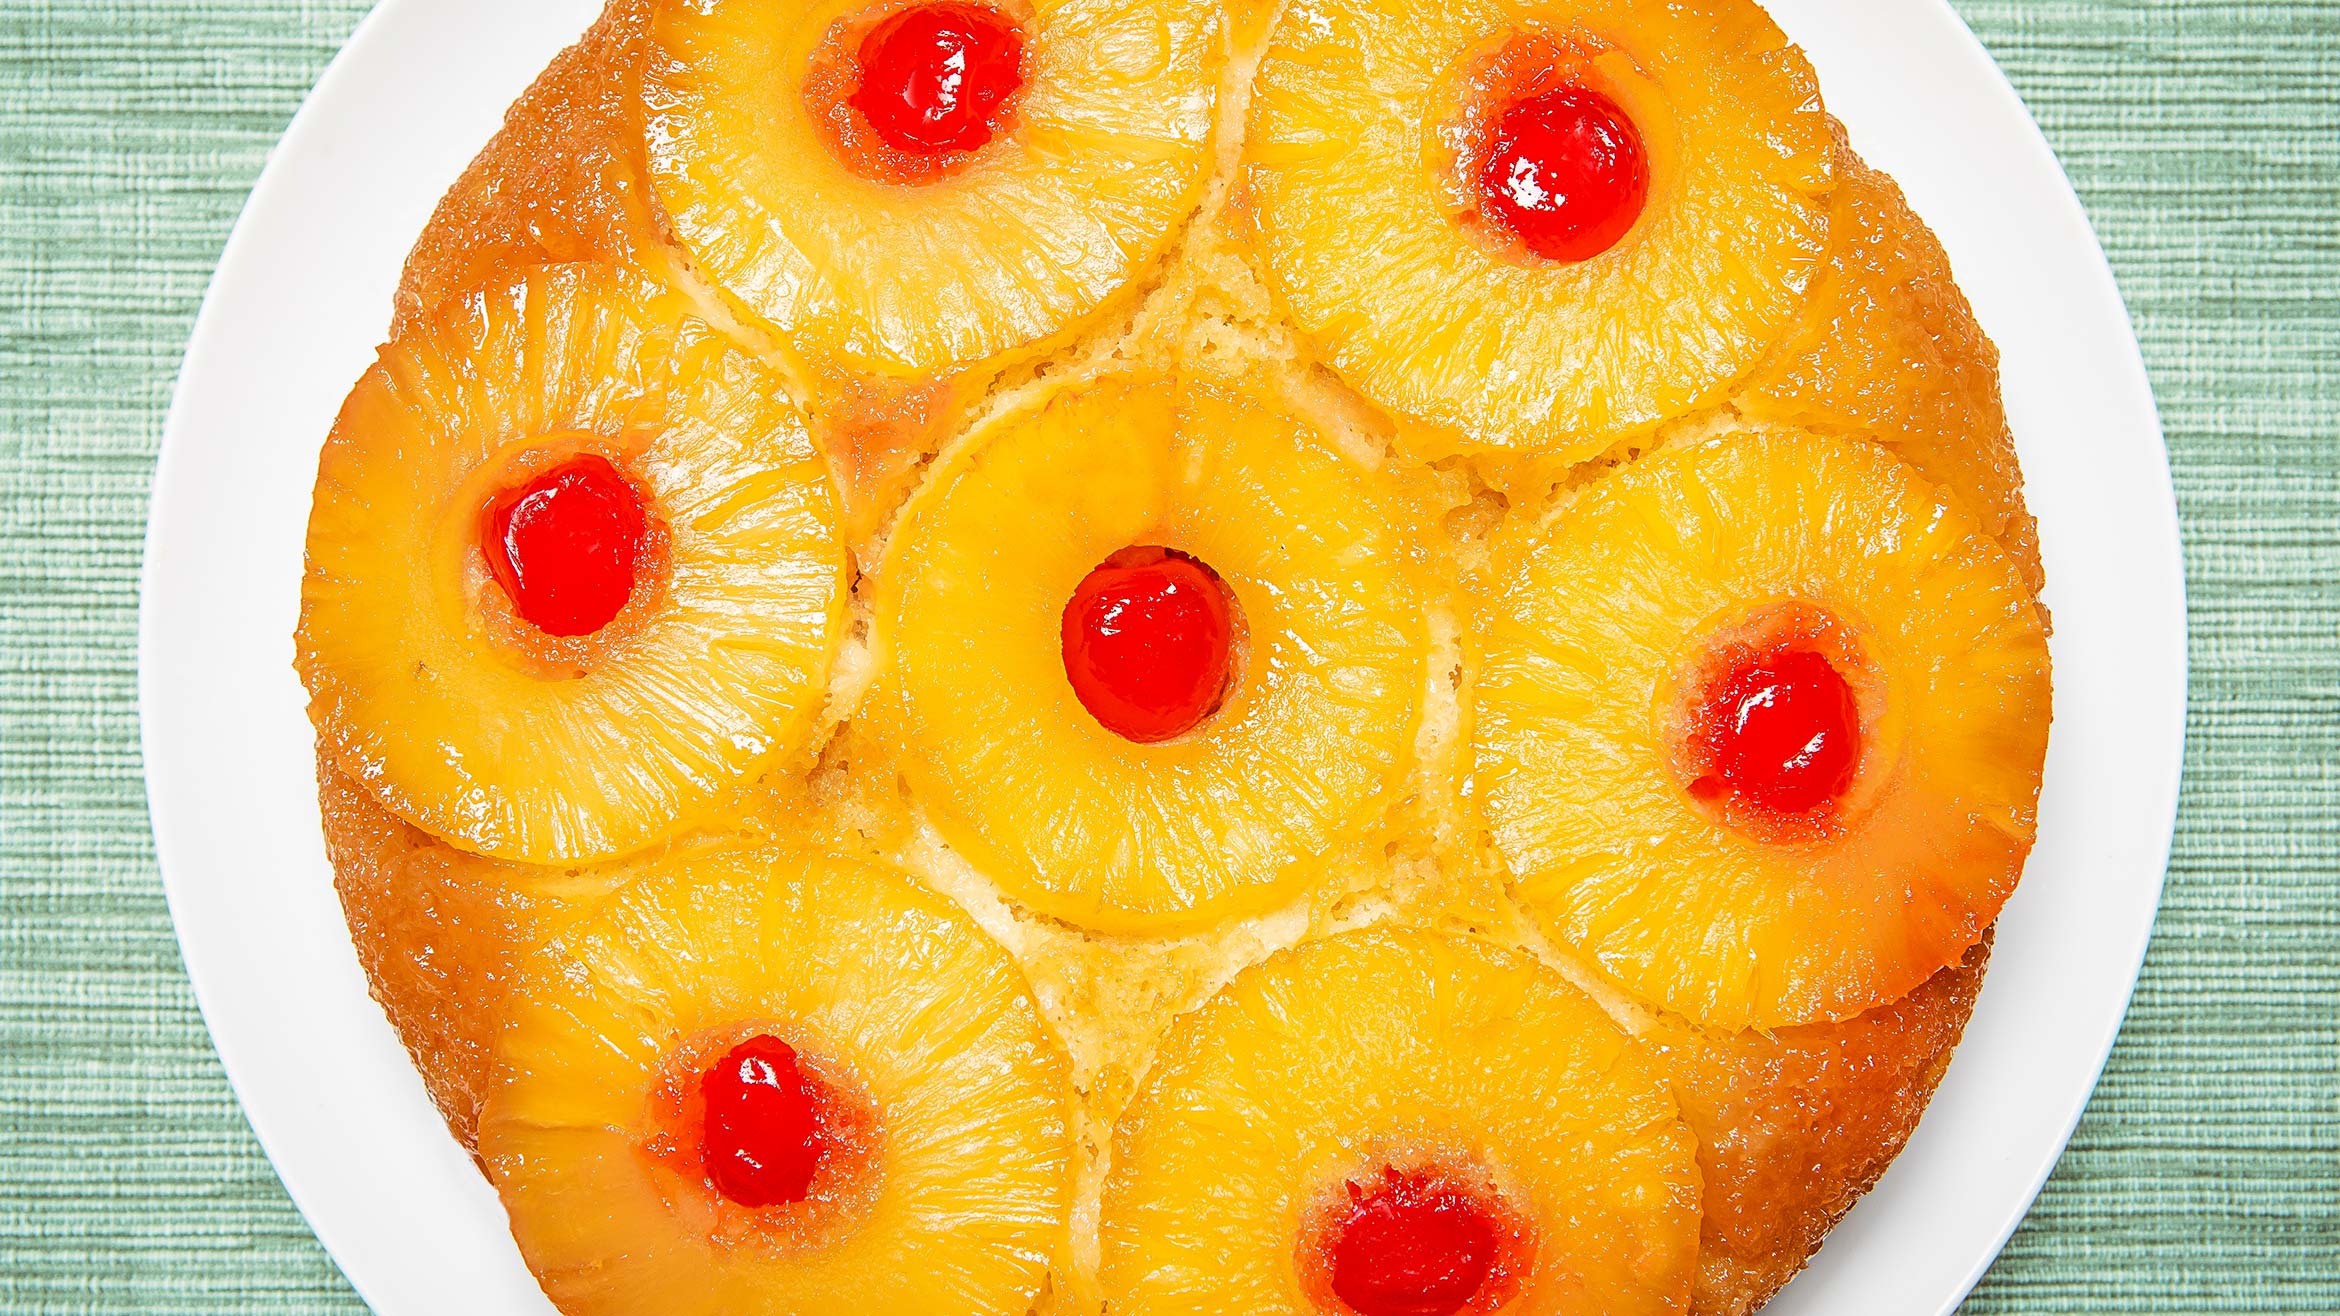 https://tastecooking.com/wp-content/uploads/2020/05/Article-Pineapple-Upside-Down-Cake-Recipe.jpg